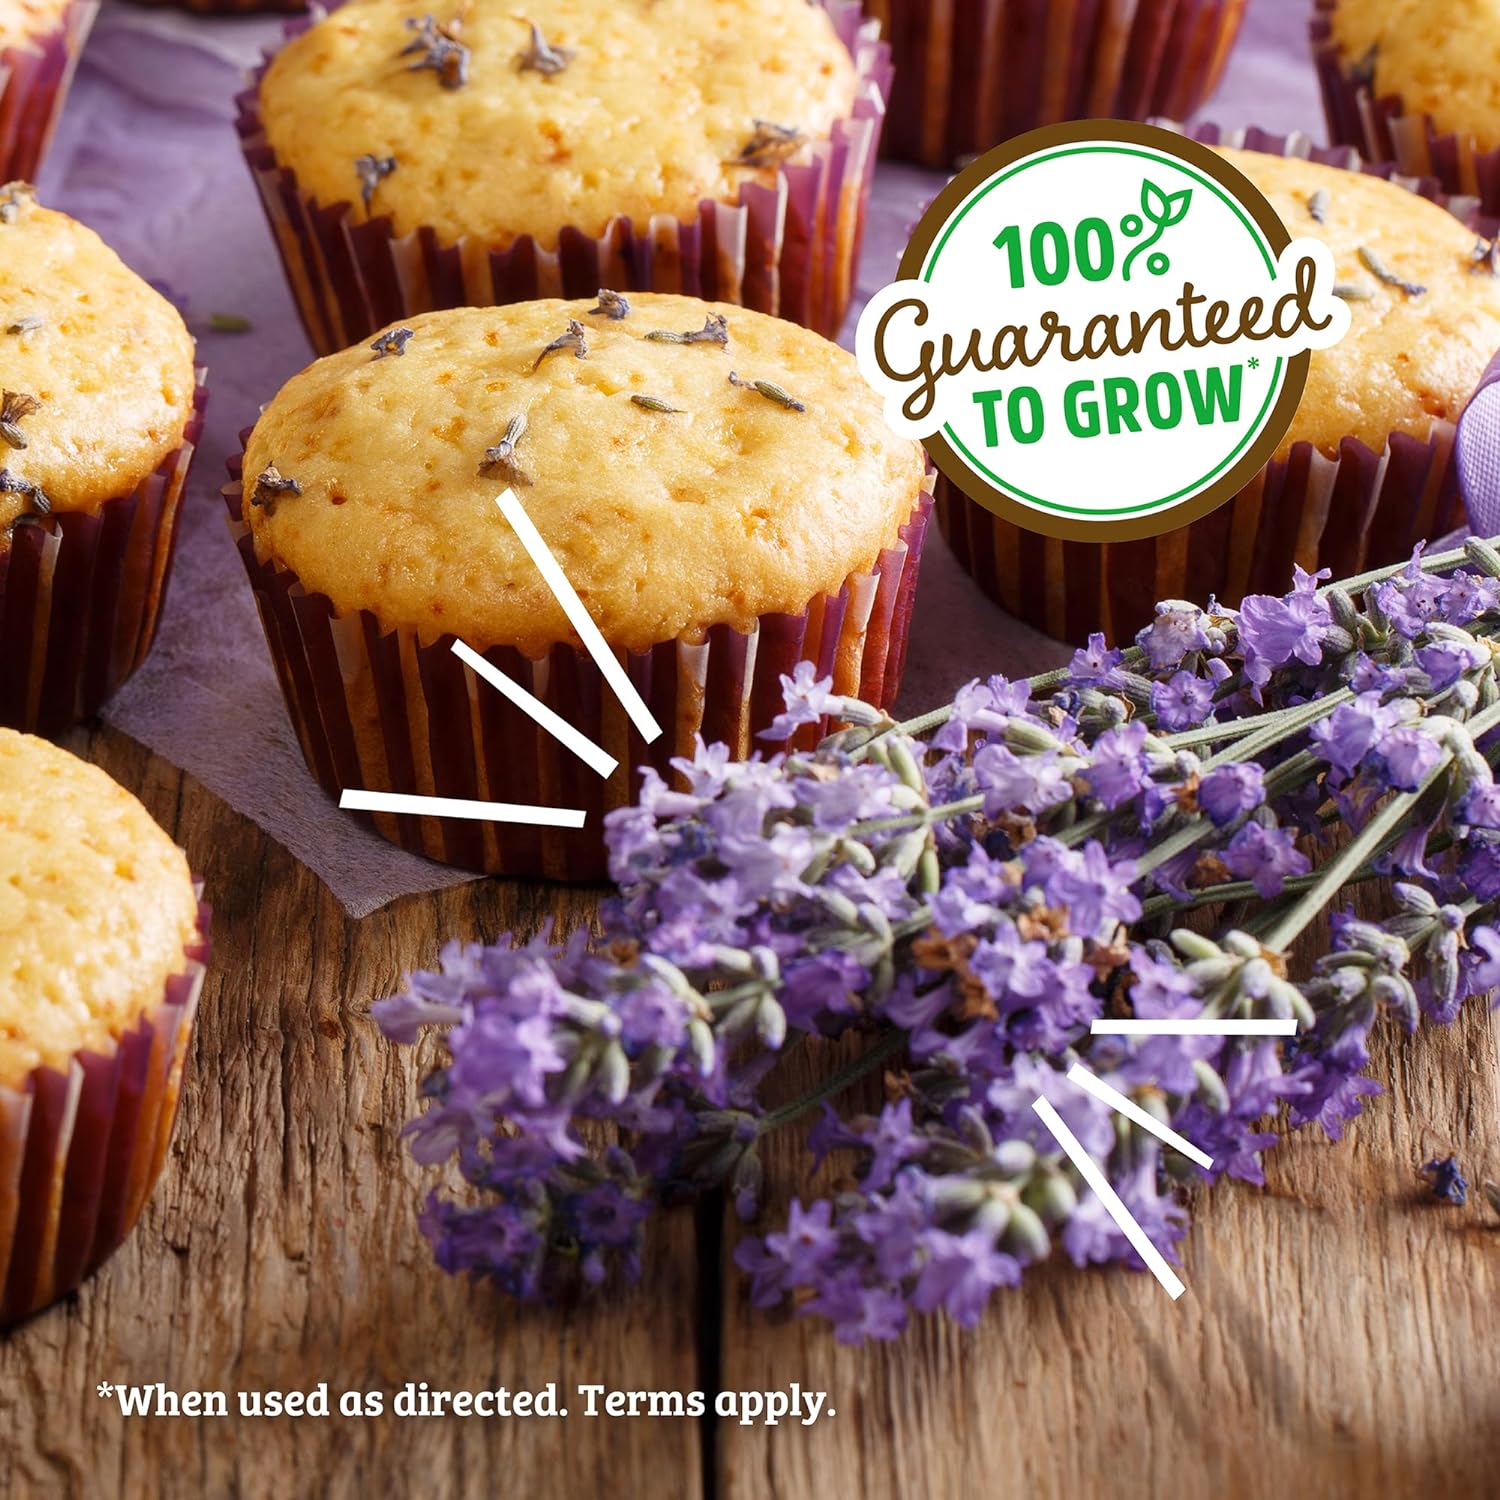 Organic Plant Grow Kit | Lavender